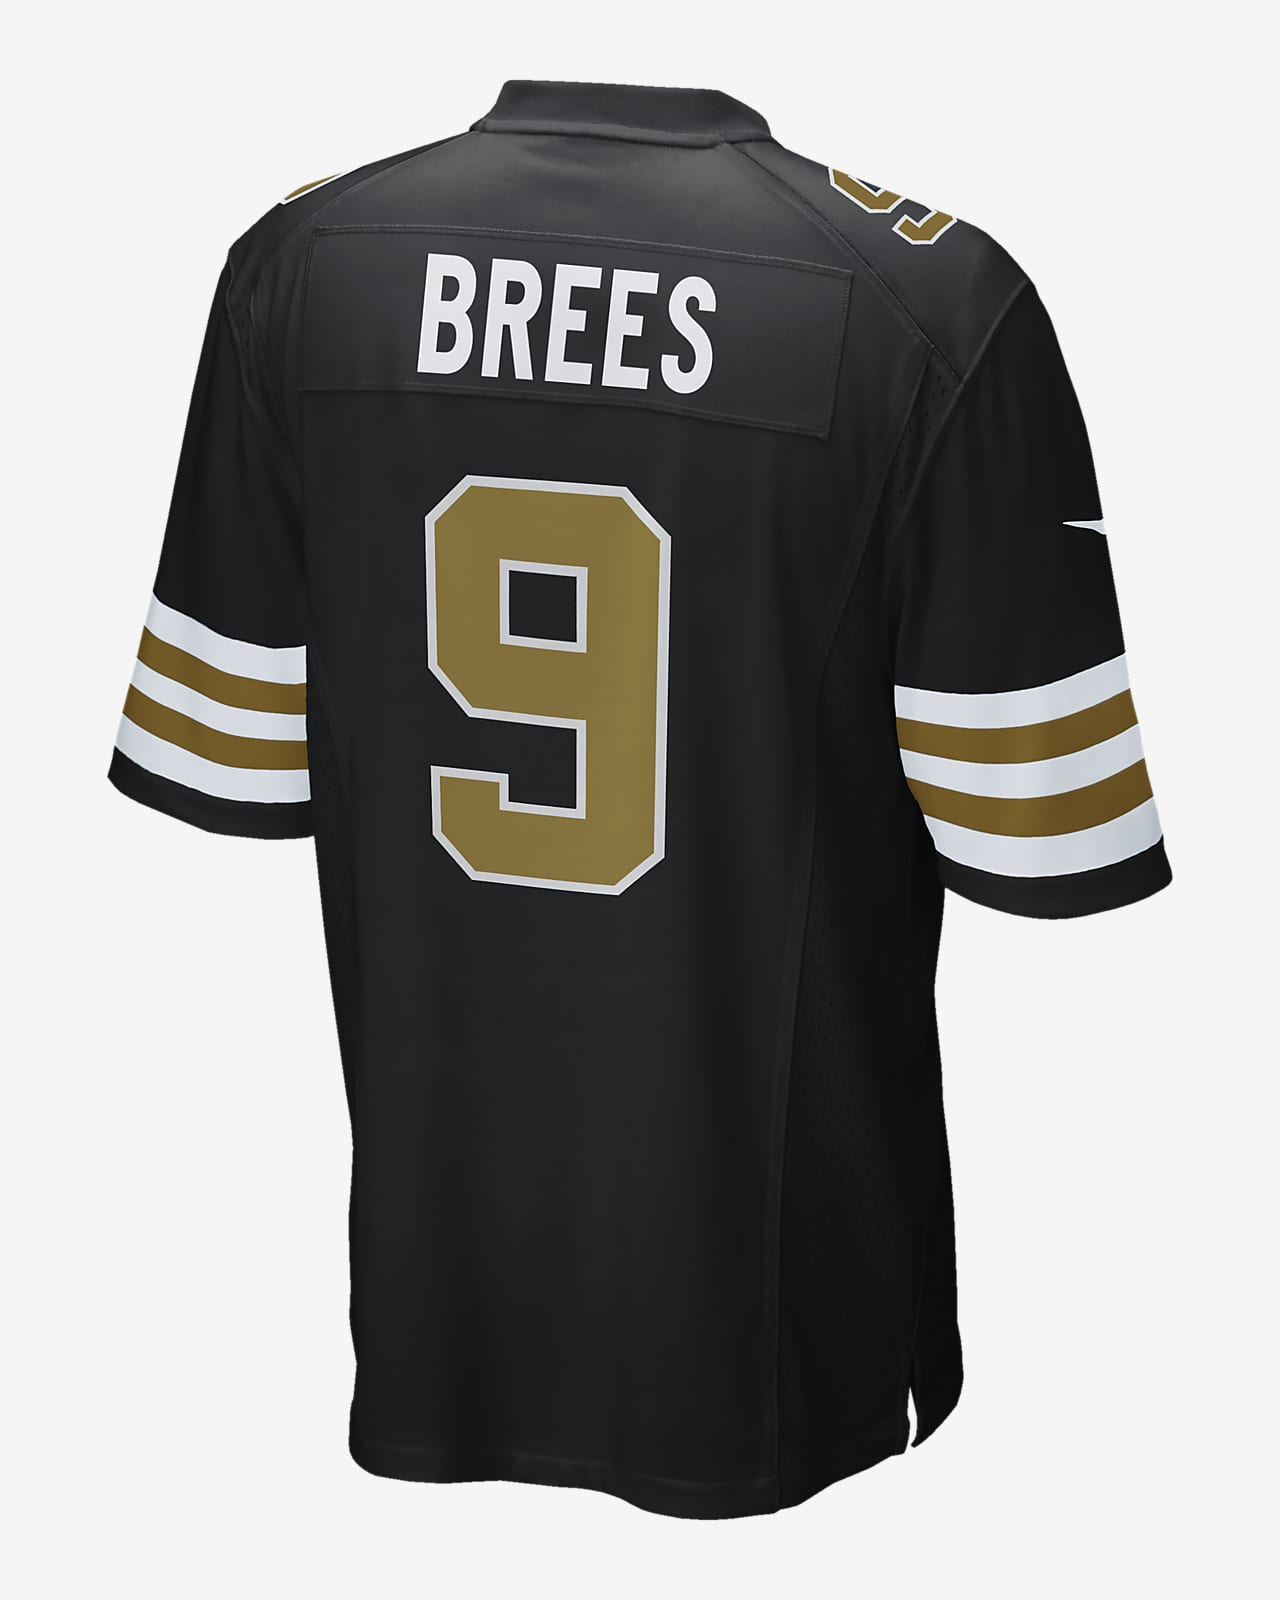 NFL New Orleans Saints (Drew Brees) Men's Game Football Jersey